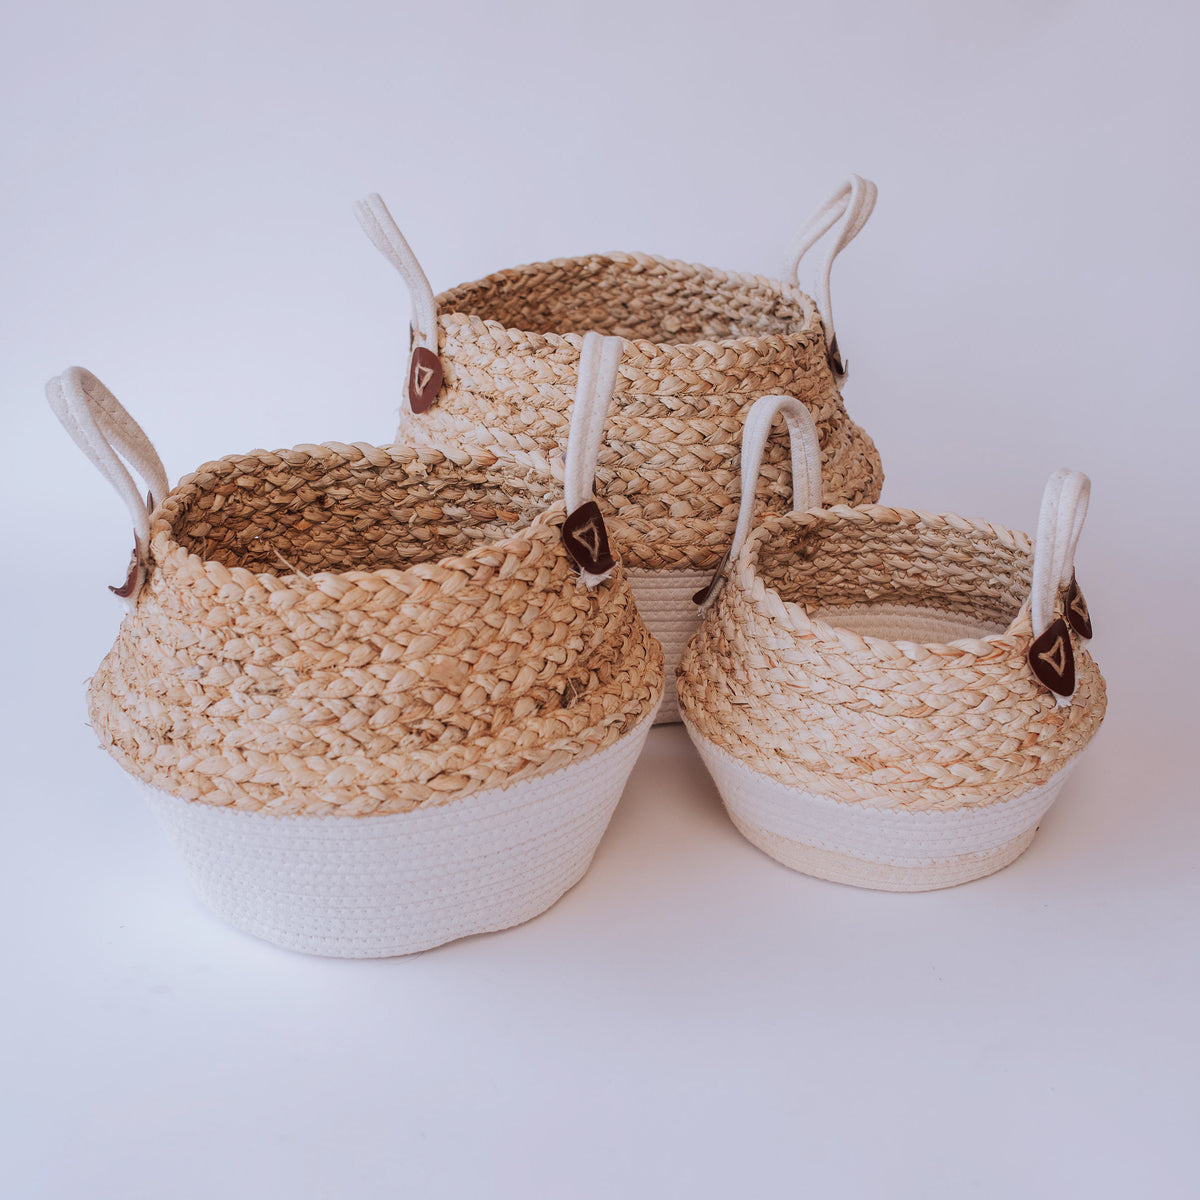 Paihia Belly Basket (Small)(17cm x 19cm)